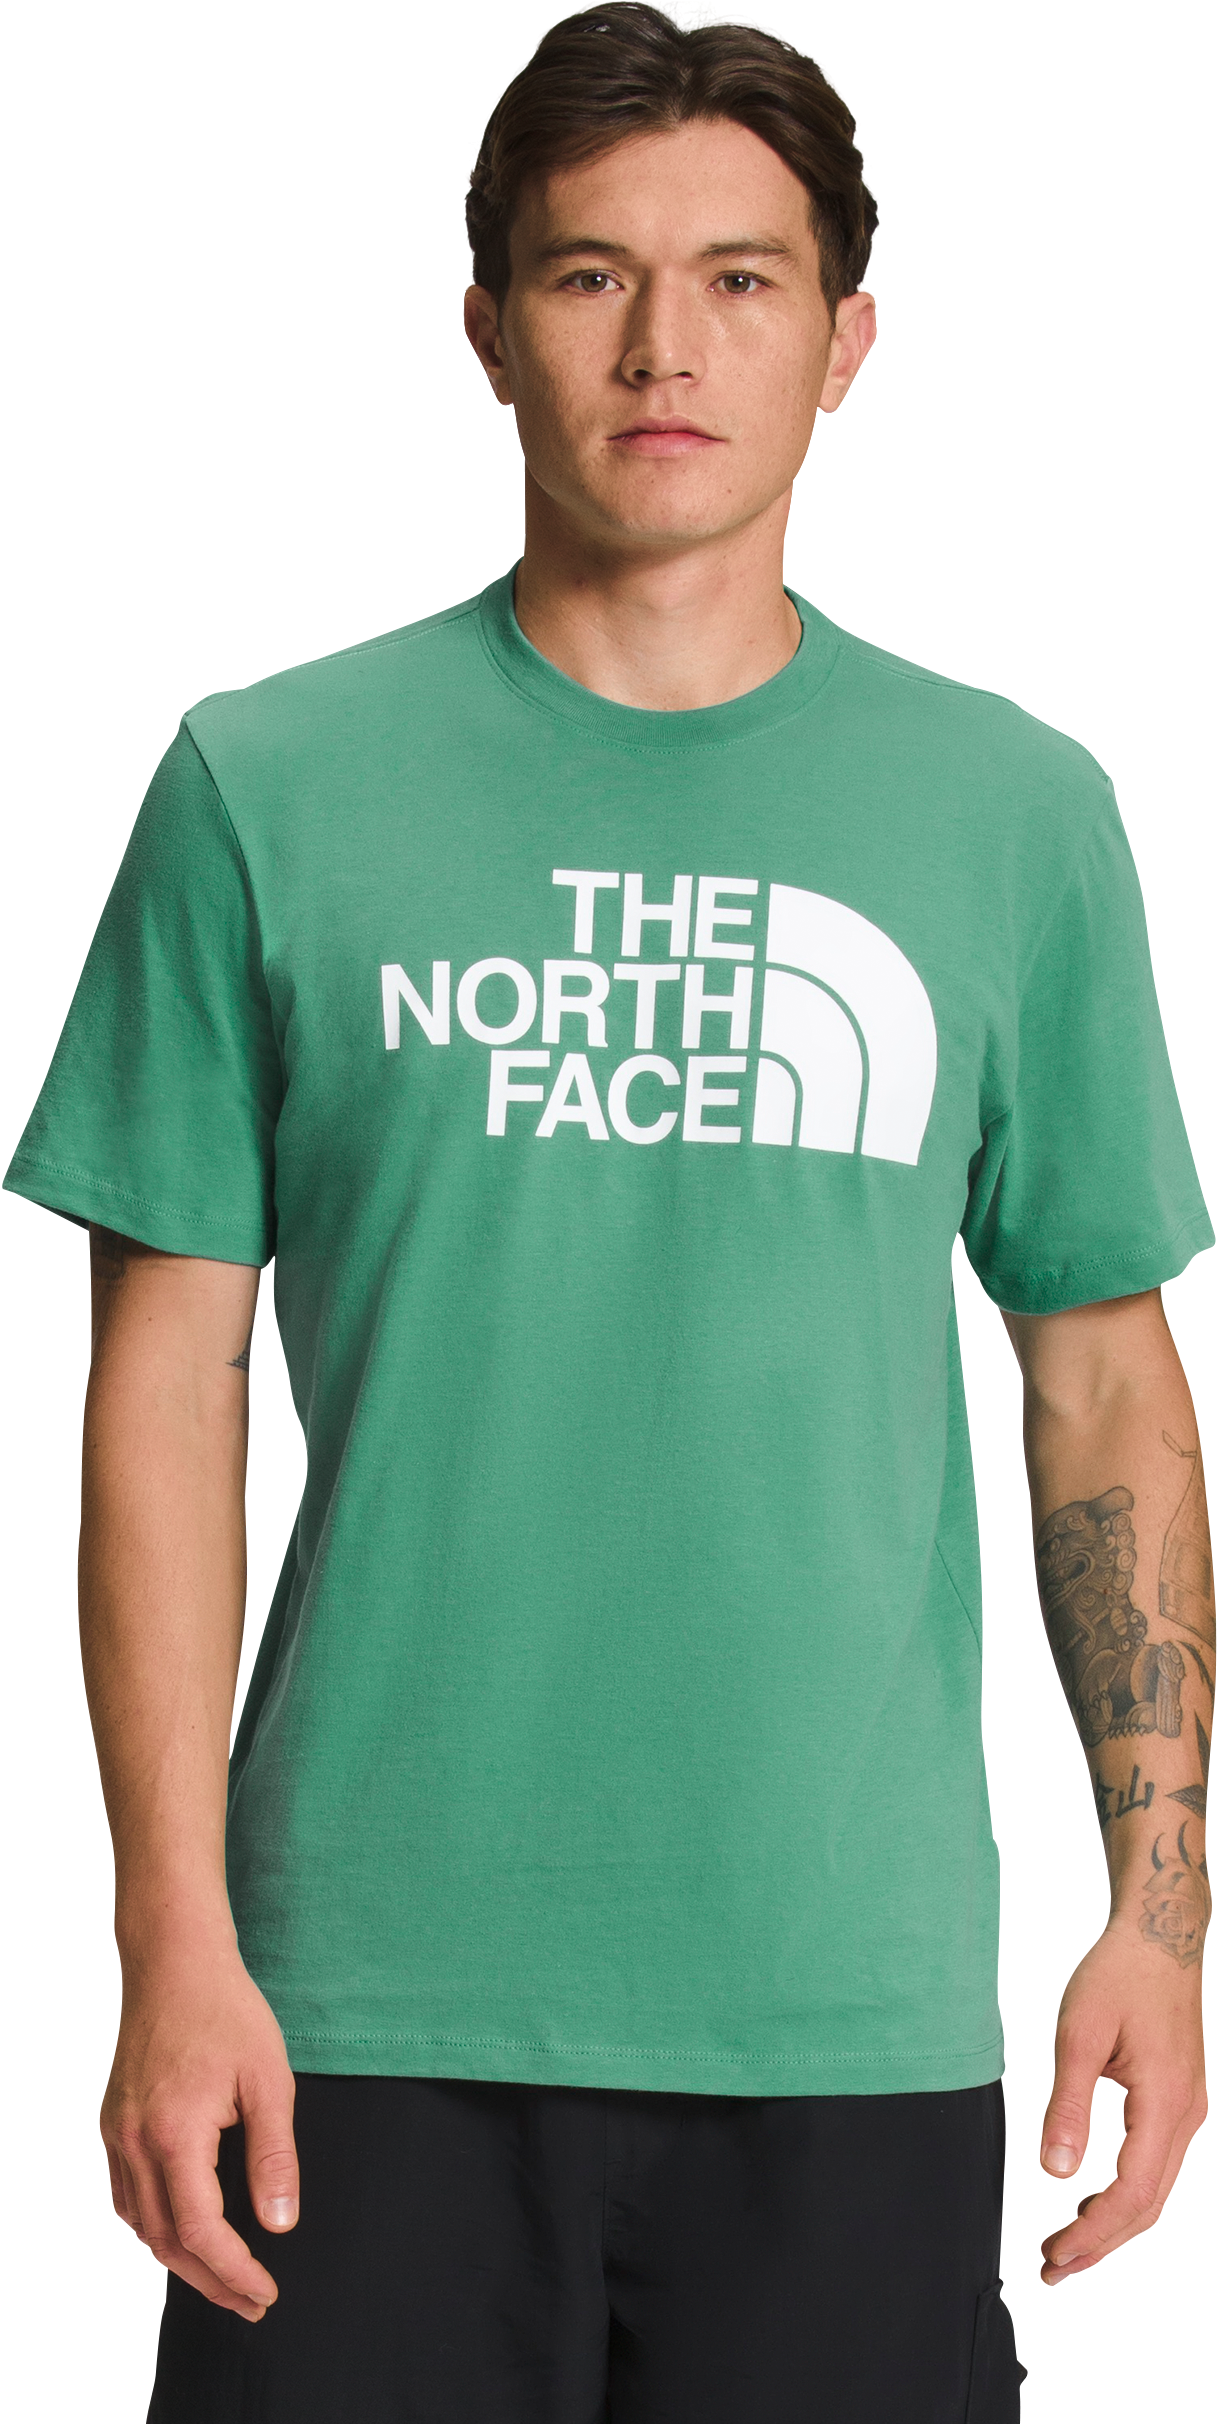 The North Face Half Dome Short-Sleeve T-Shirt for Men - Deep Grass Green - XL